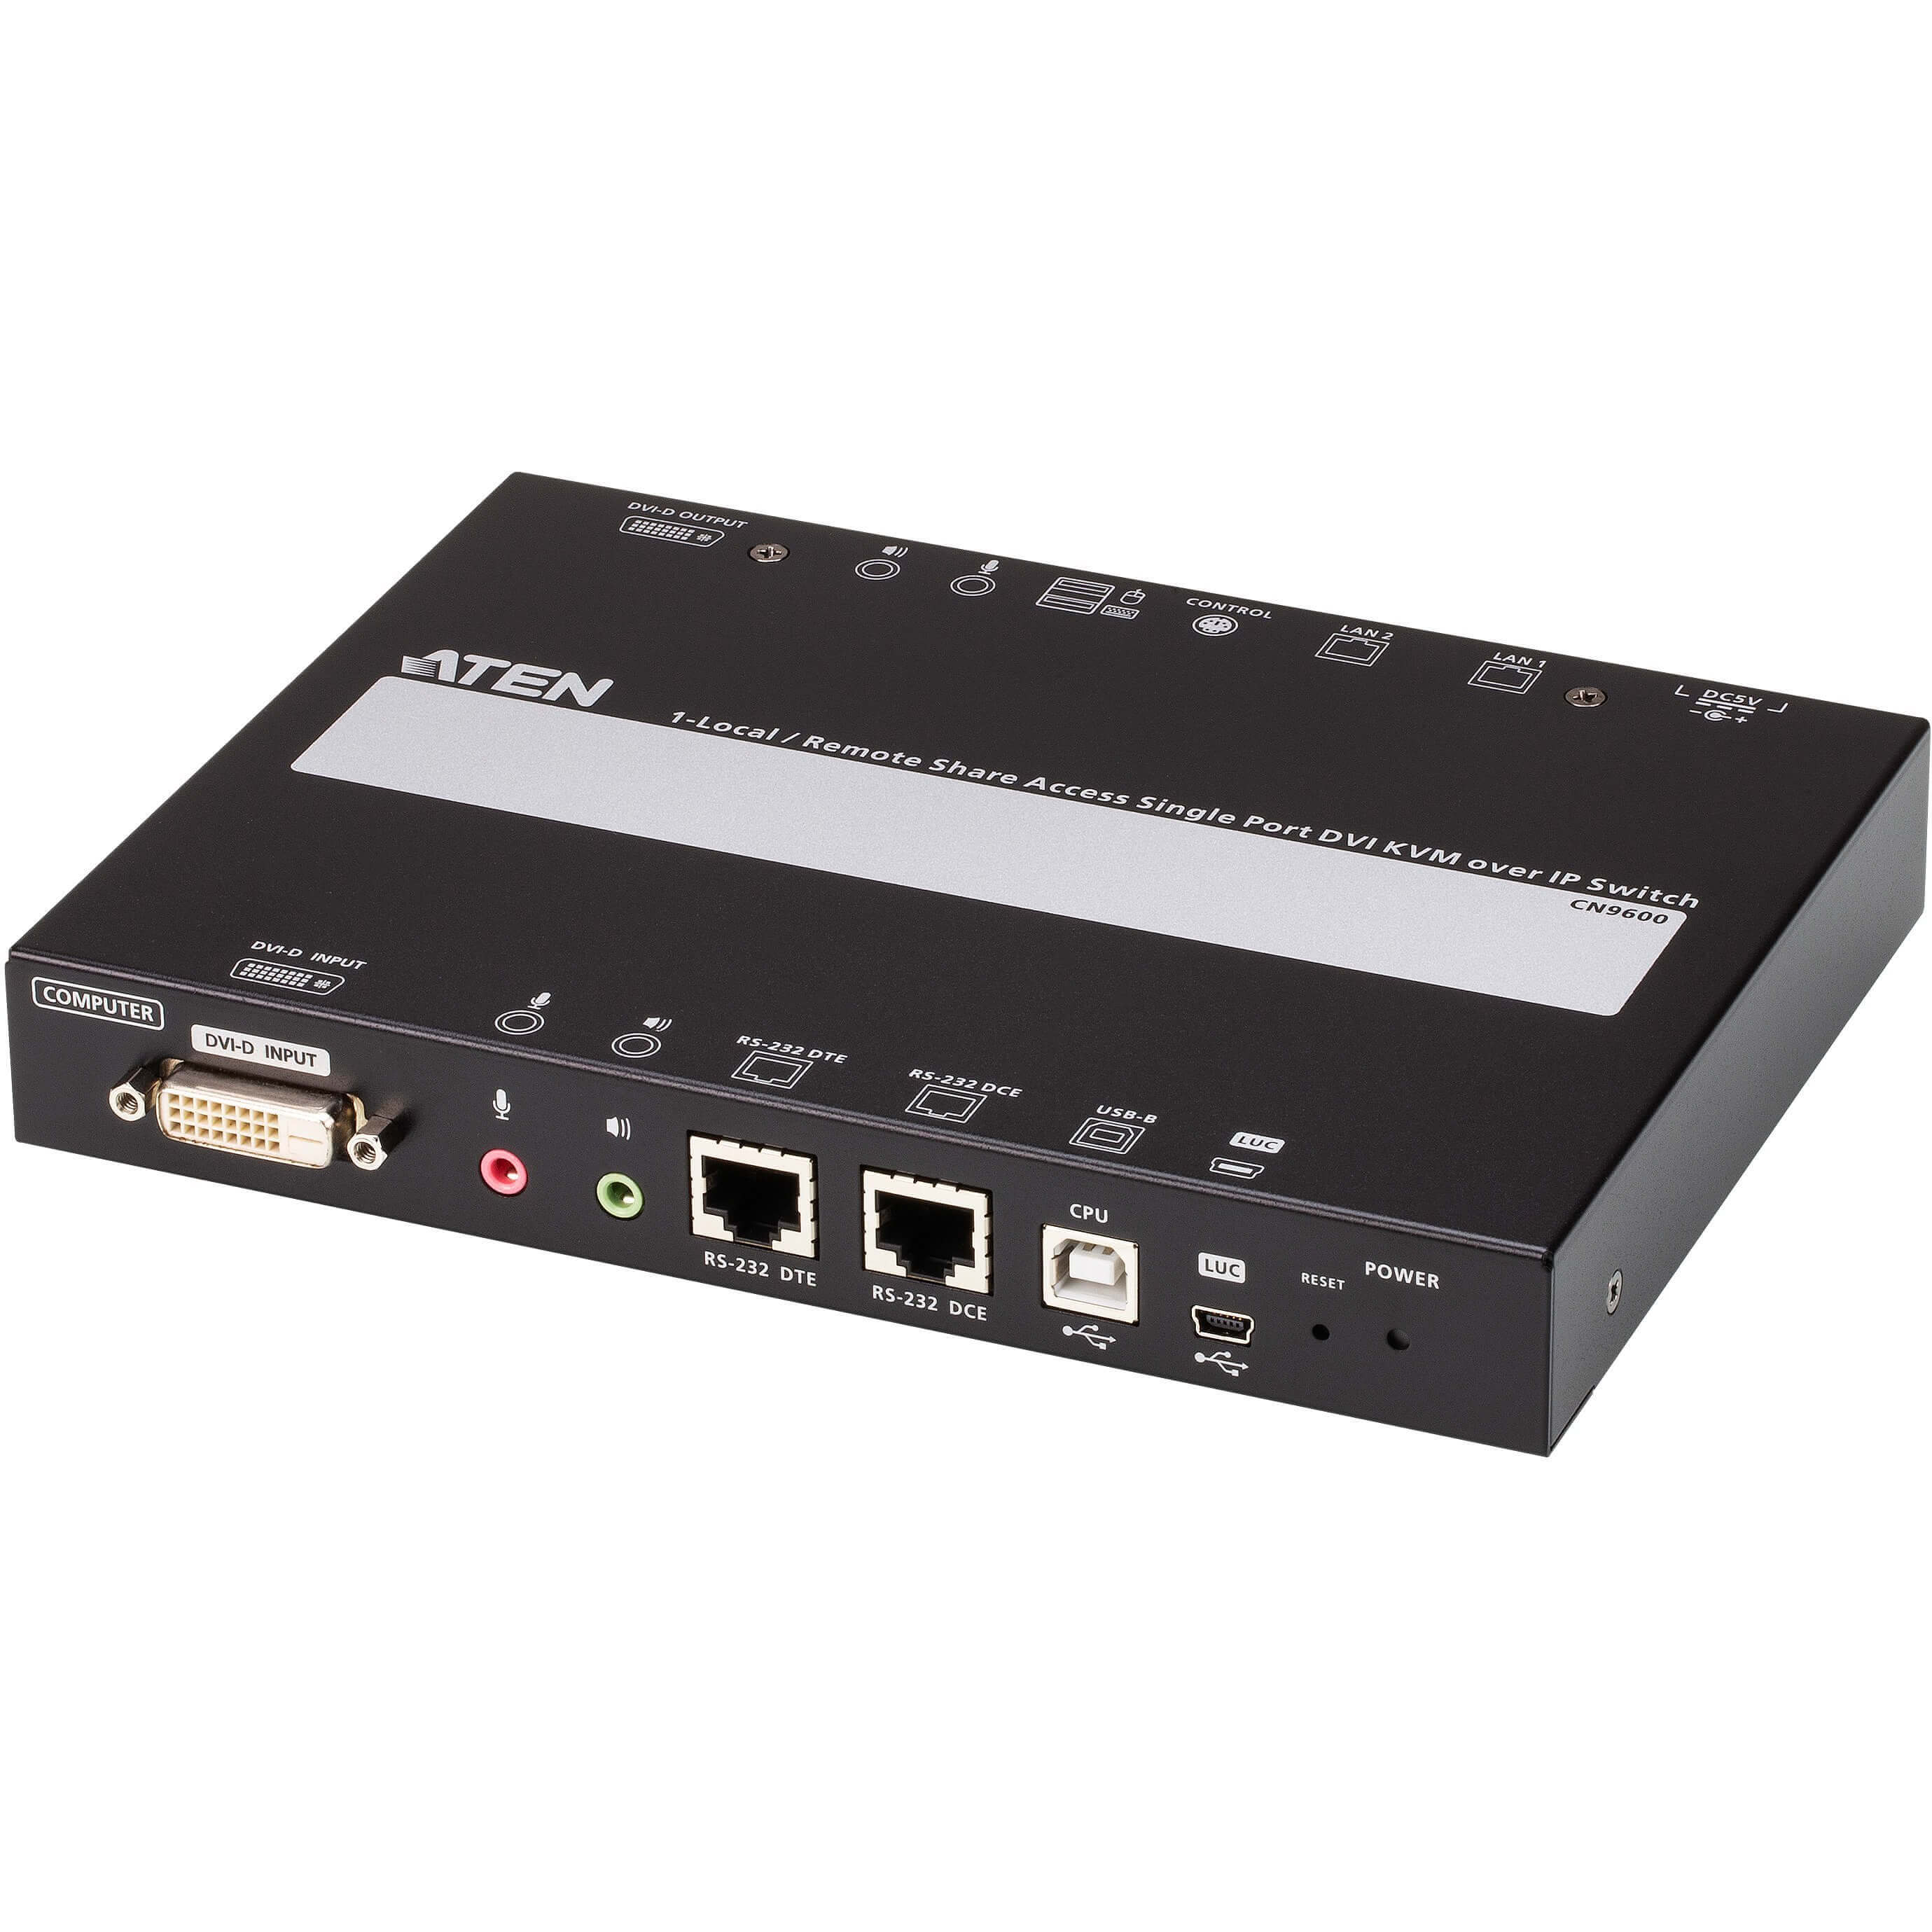   KVM extender   KVM Extender over IP USB DVI RS232 + Virtual mdia CN9600-AT-G